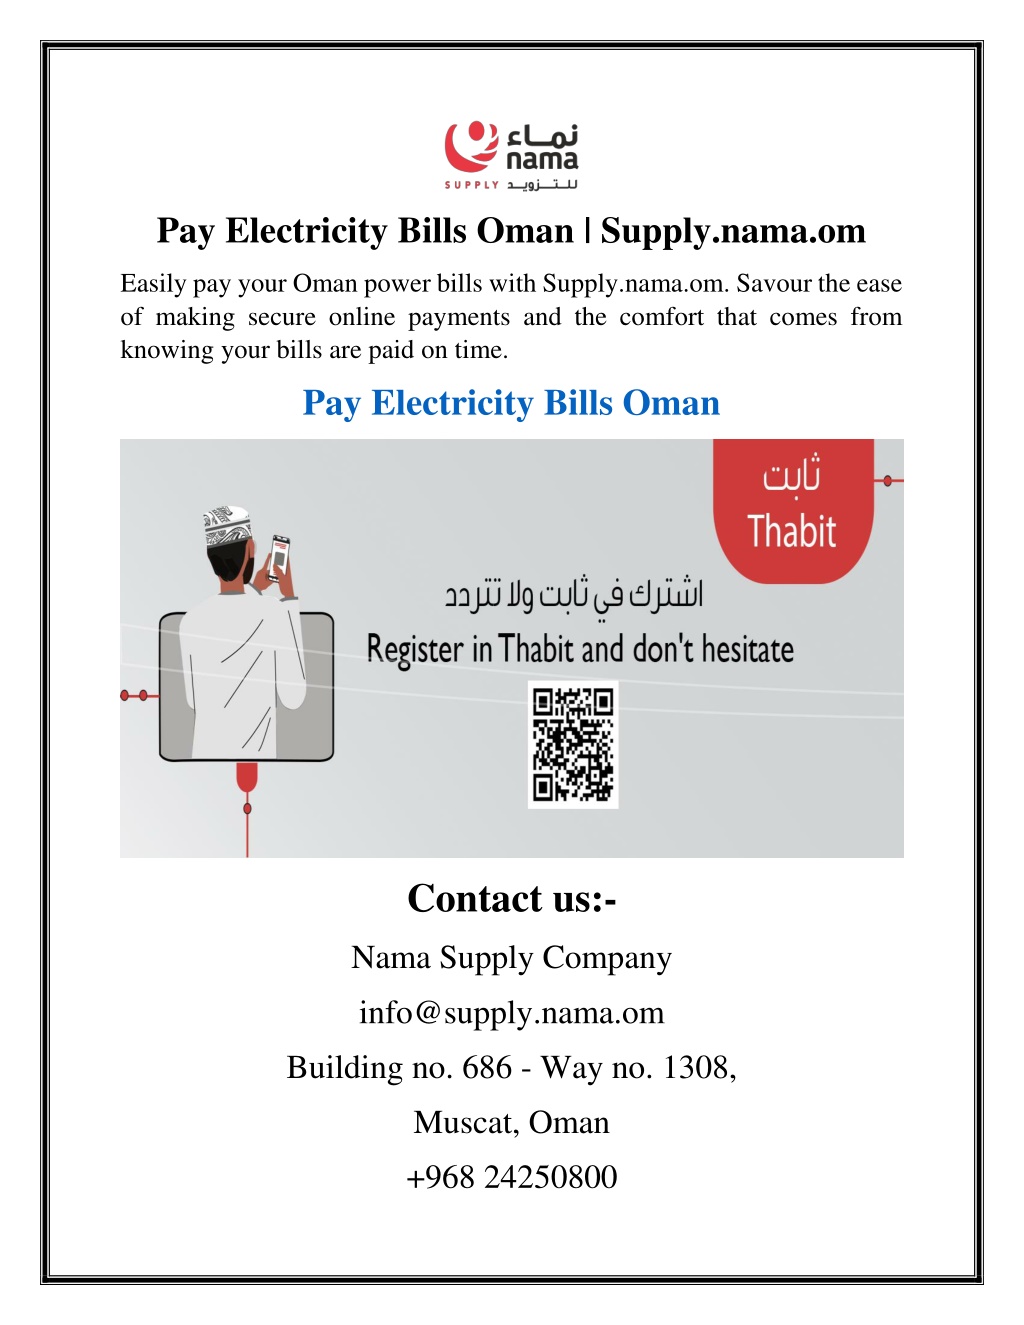 pay electricity bills oman supply nama om l.w